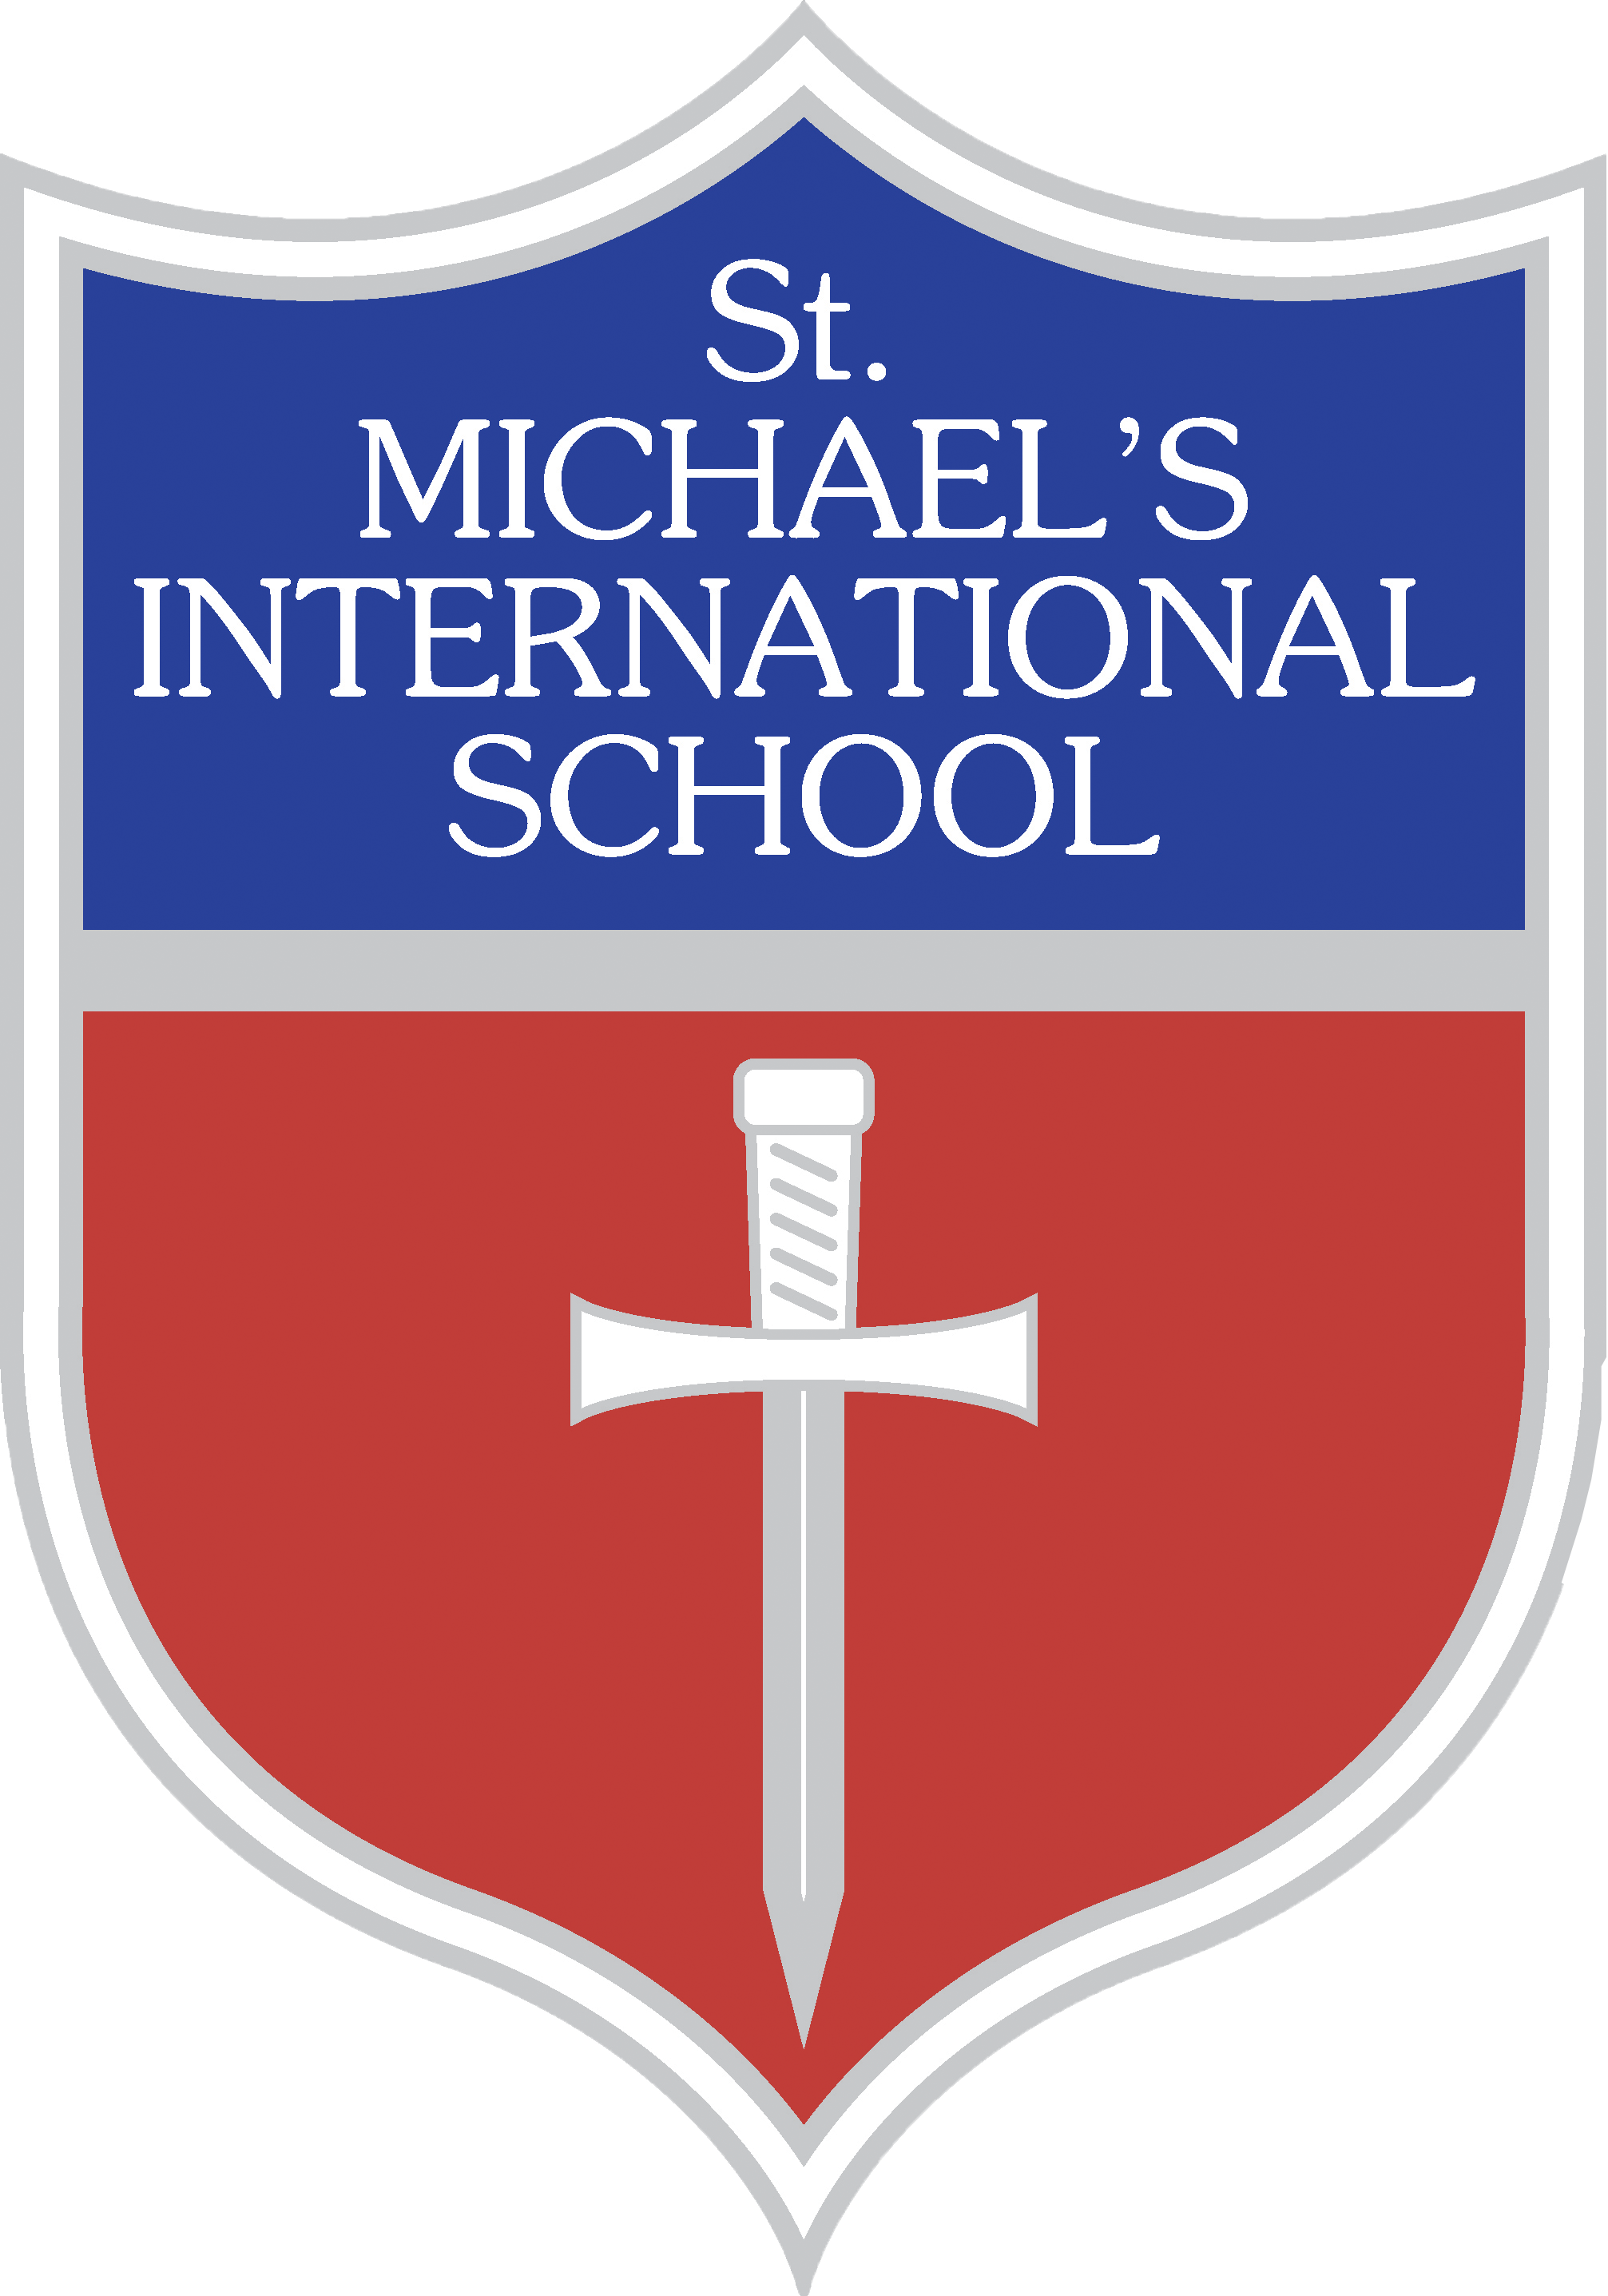 St. Michael's International School Recognized